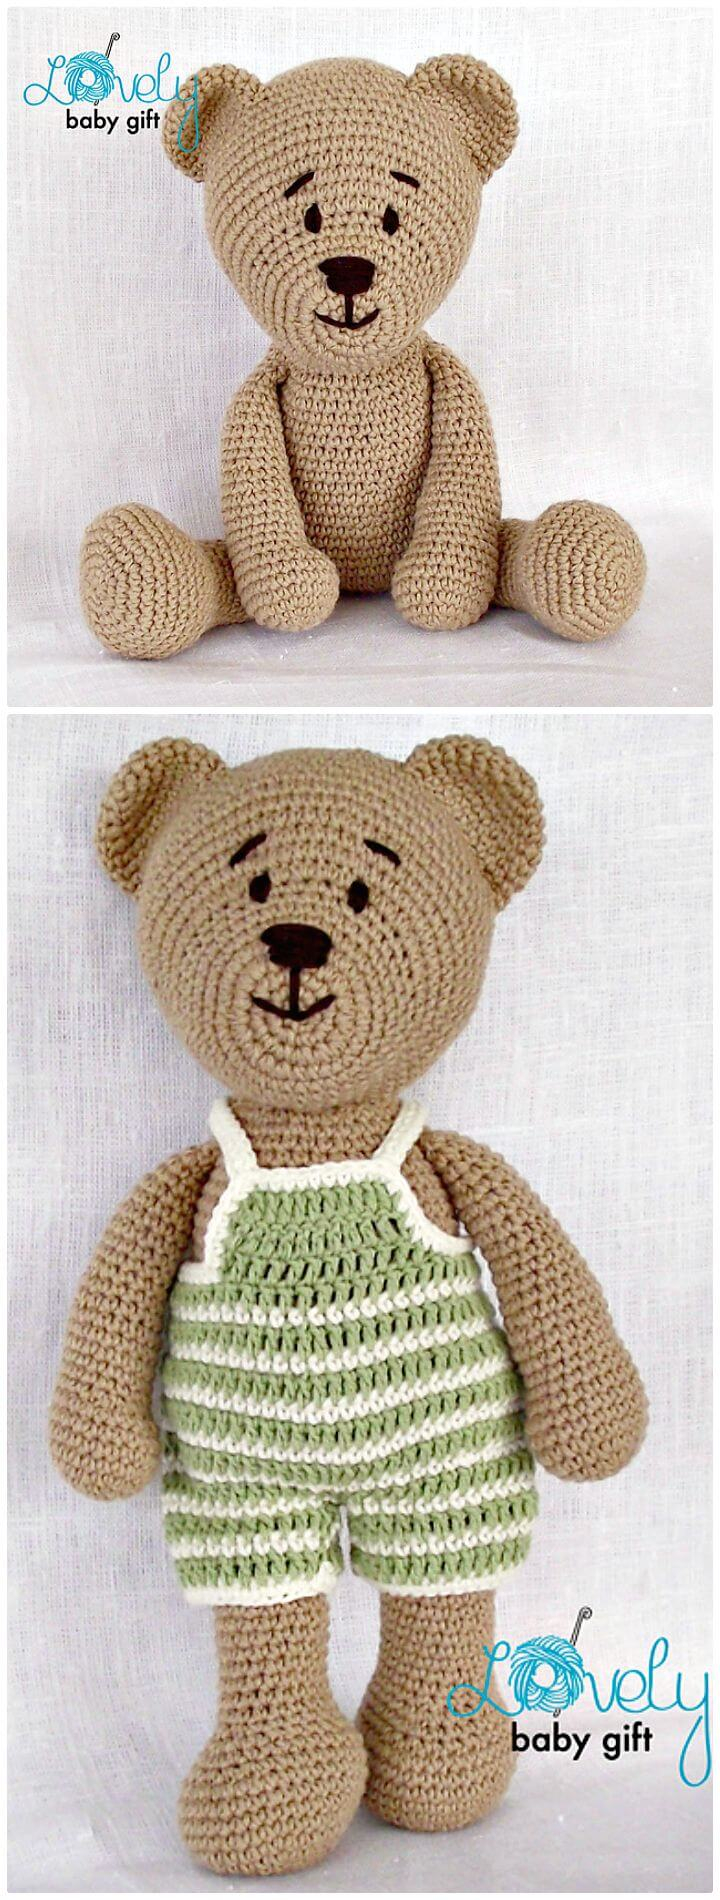 50 Free Crochet Teddy Bear Patterns DIY Crafts